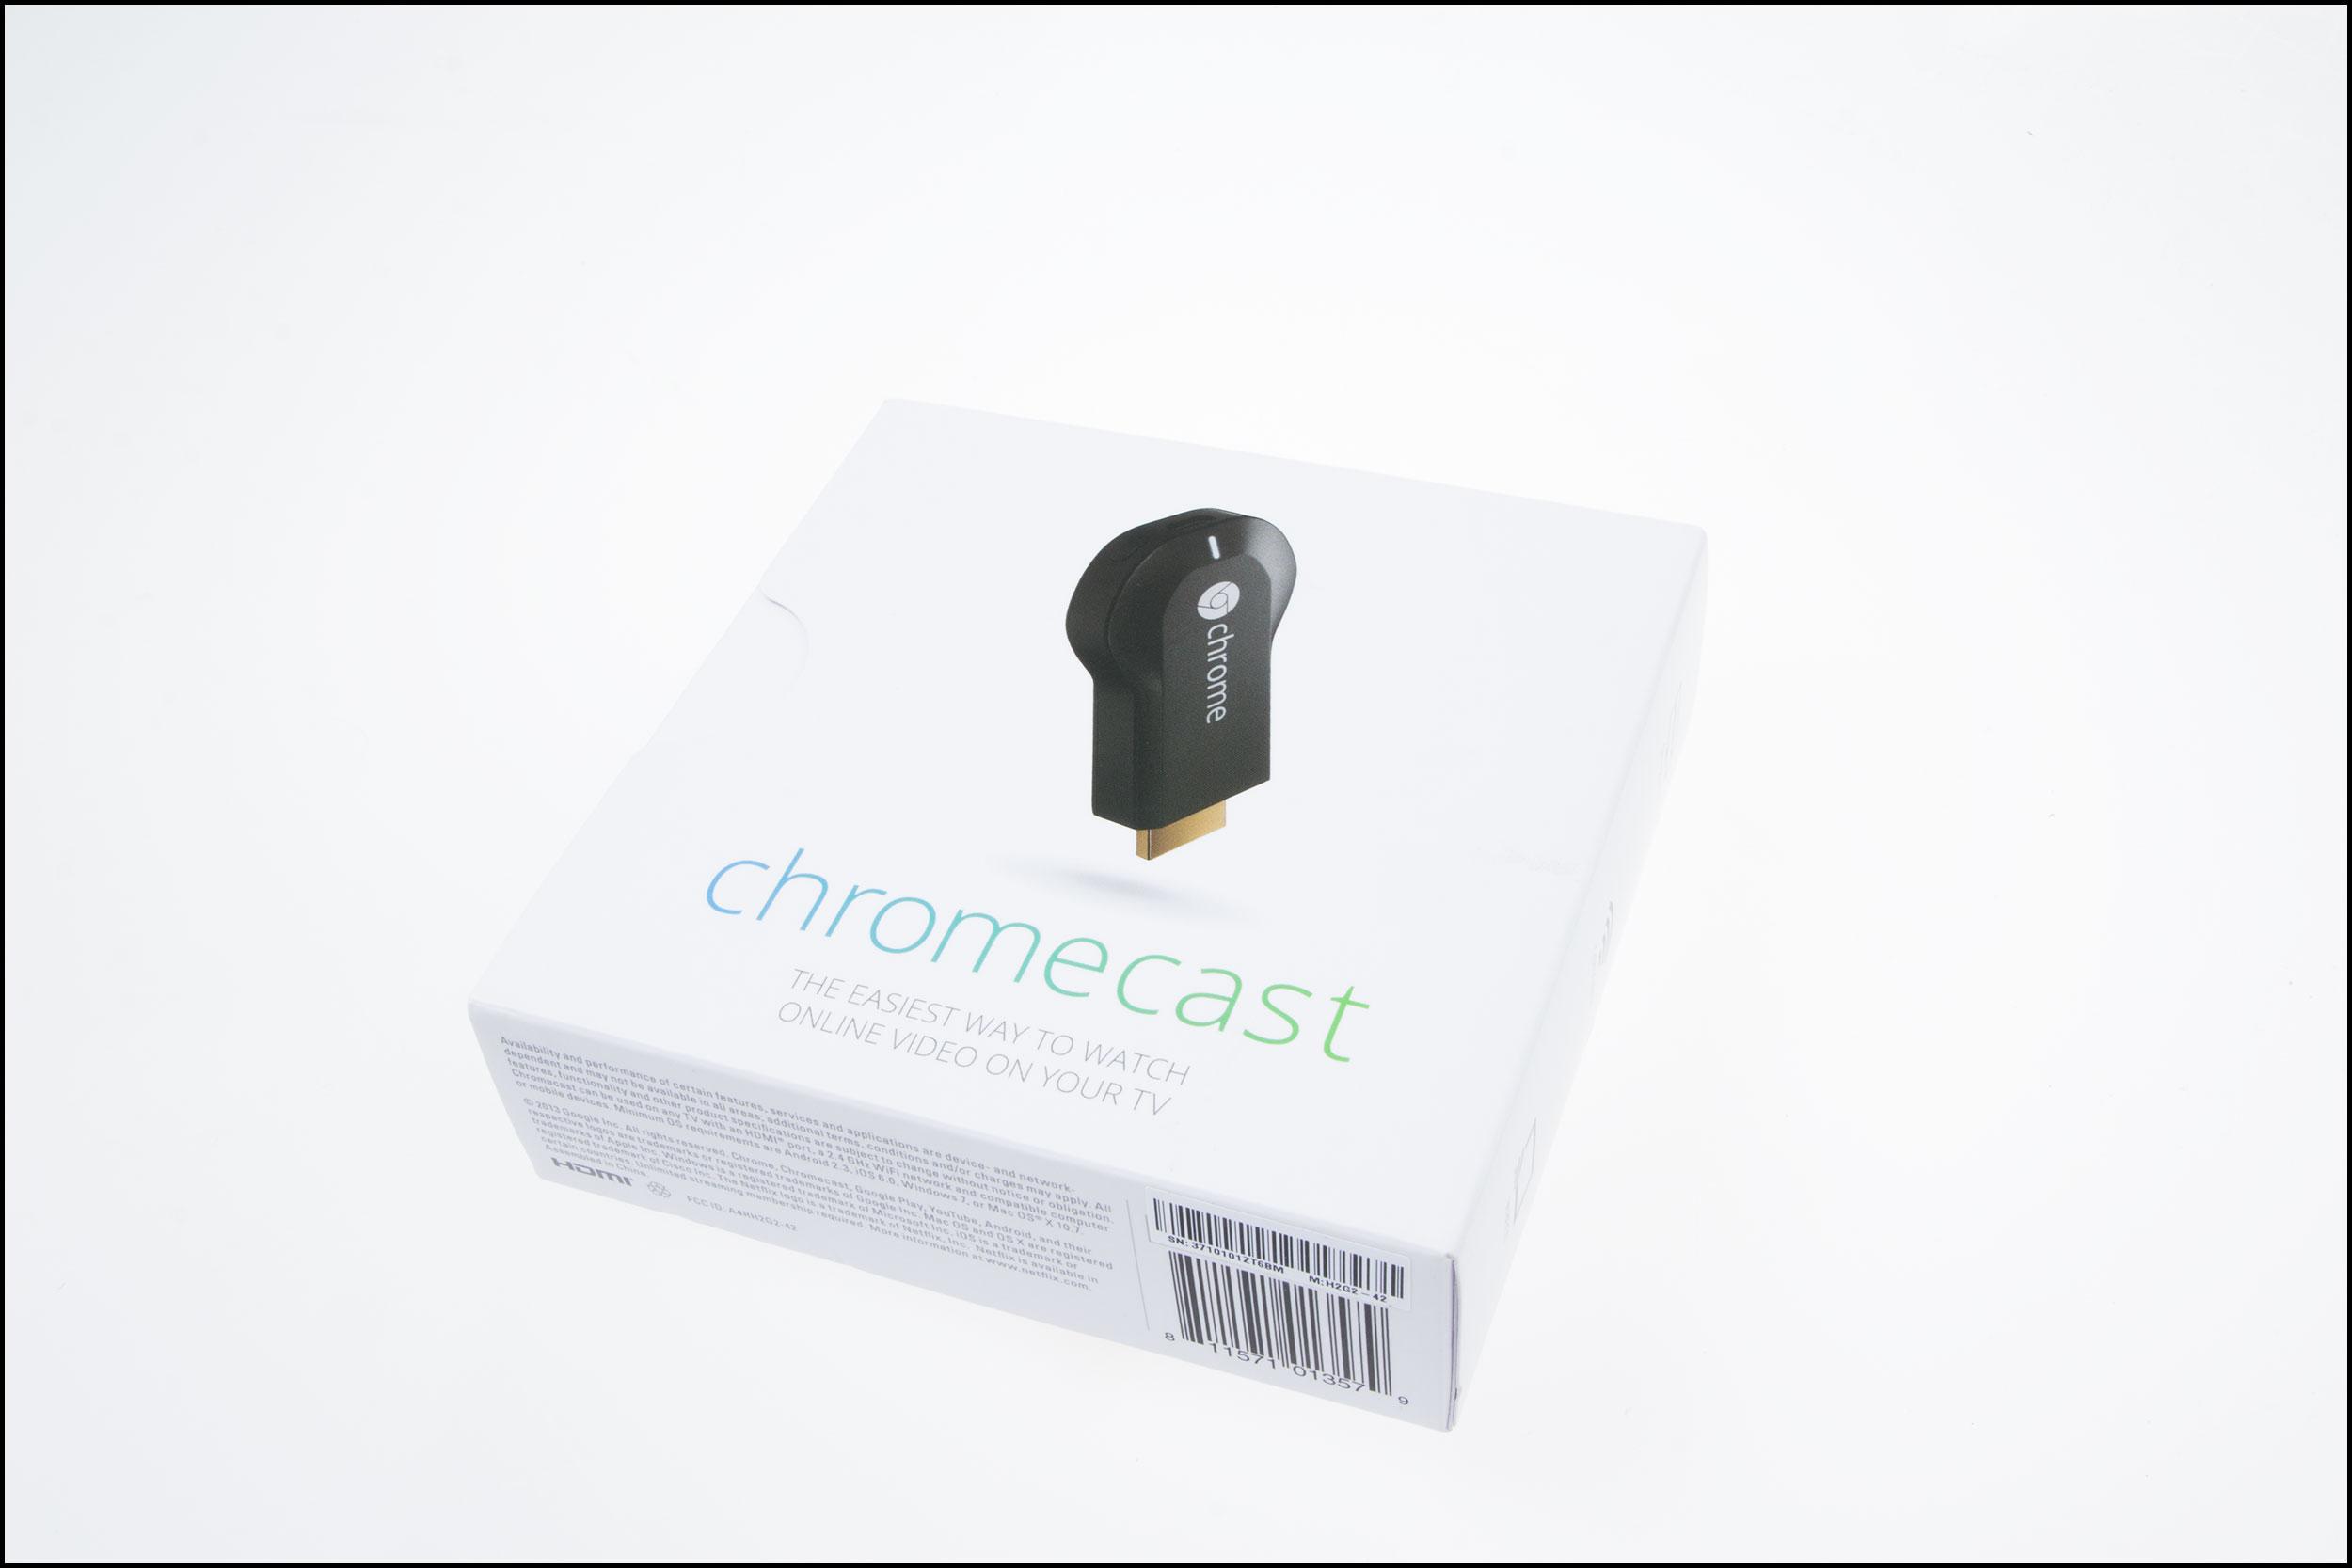 Chromecast leveres i en enkel eske på størrelse med en diskett. Foto: Jørgen Elton Nilsen, Hardware.no